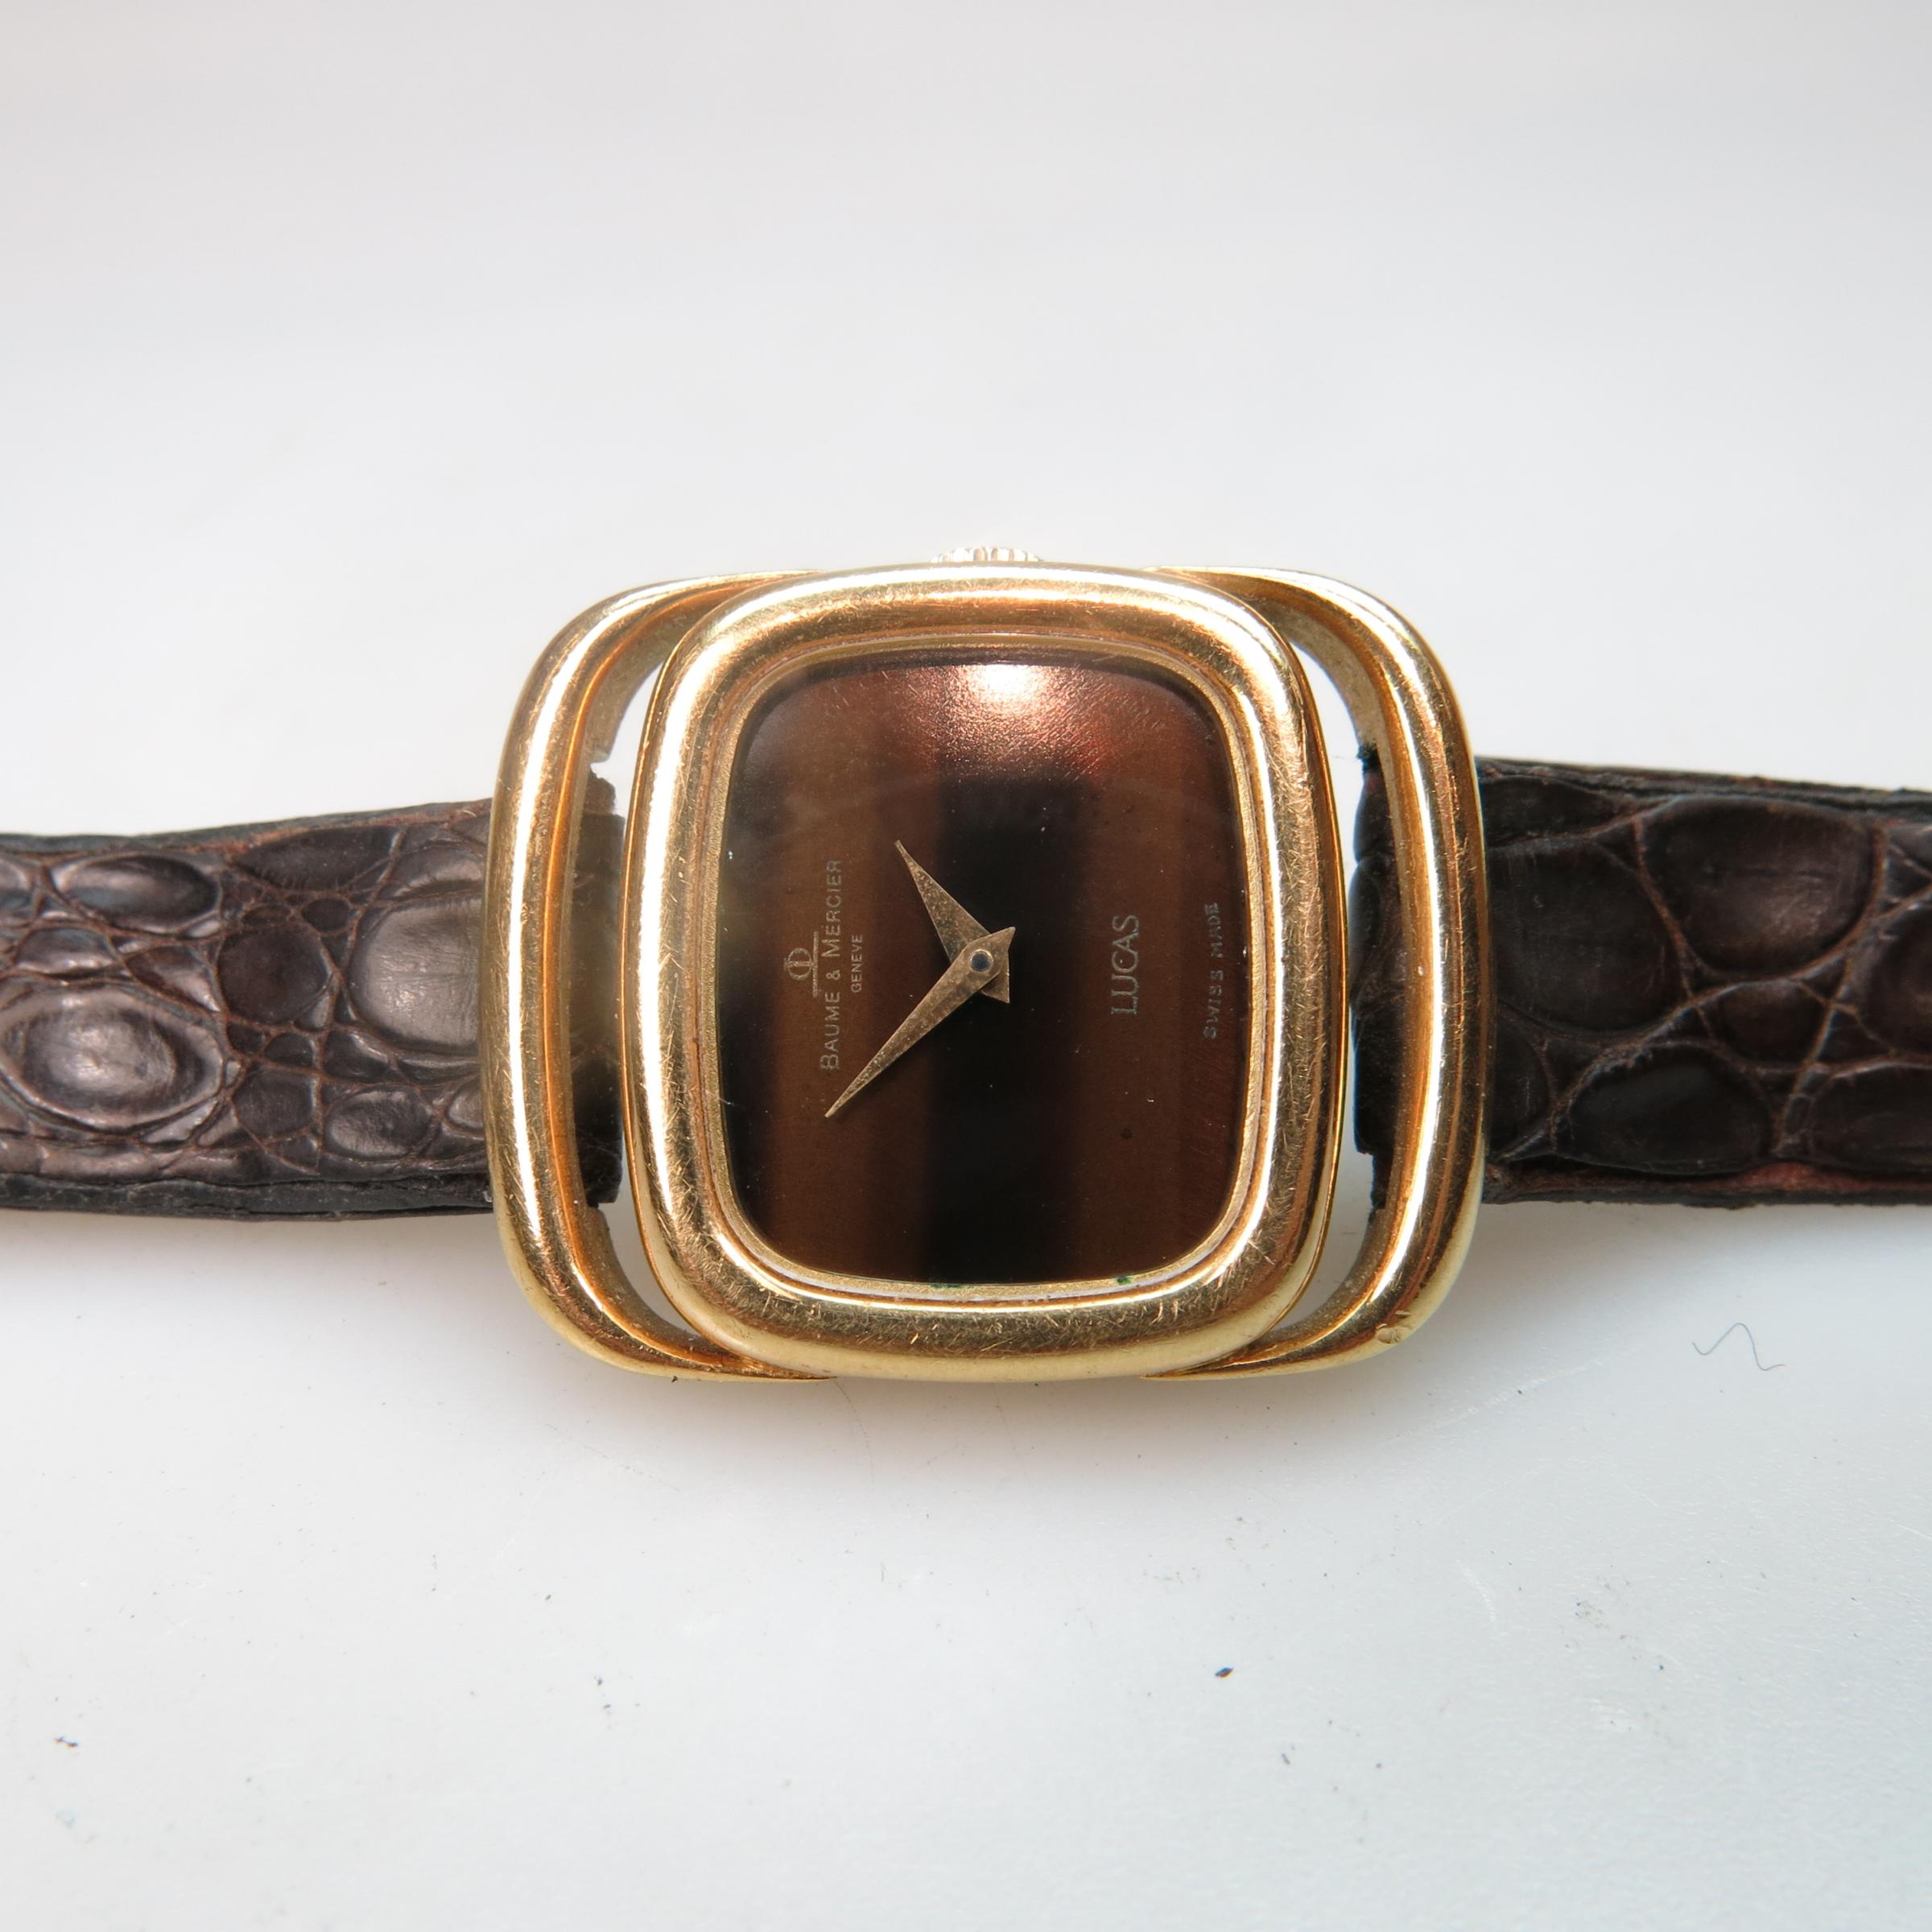 Lady's Baume & Mercier Wristwatch